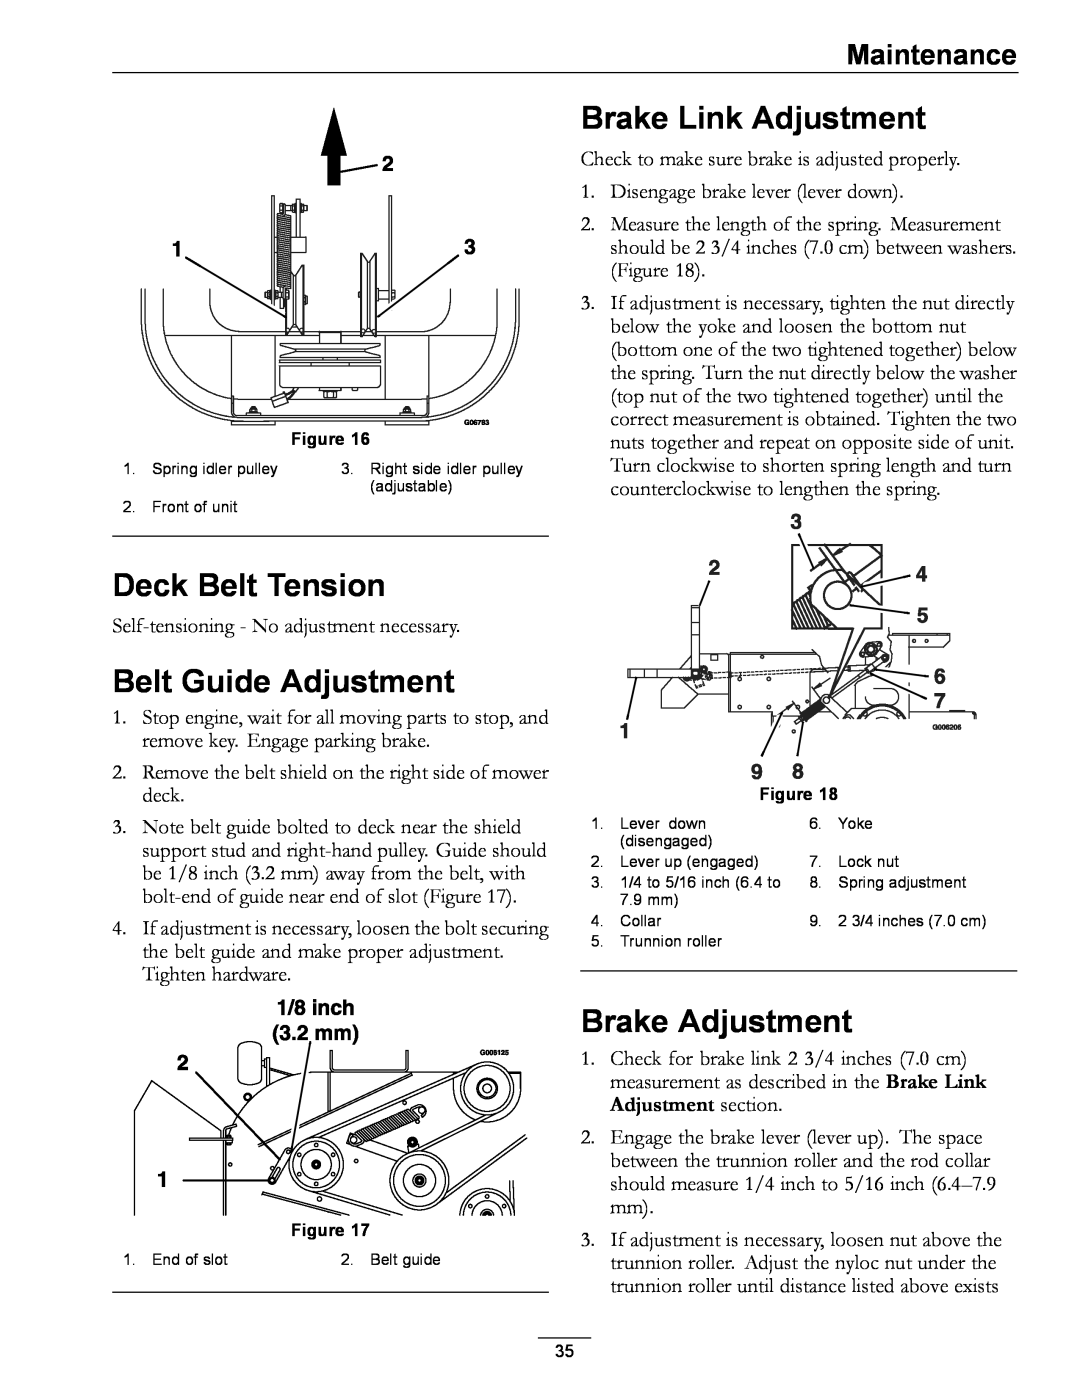 Exmark LZ27KC604 manual Brake Link Adjustment, Deck Belt Tension, Belt Guide Adjustment, Brake Adjustment, Maintenance 